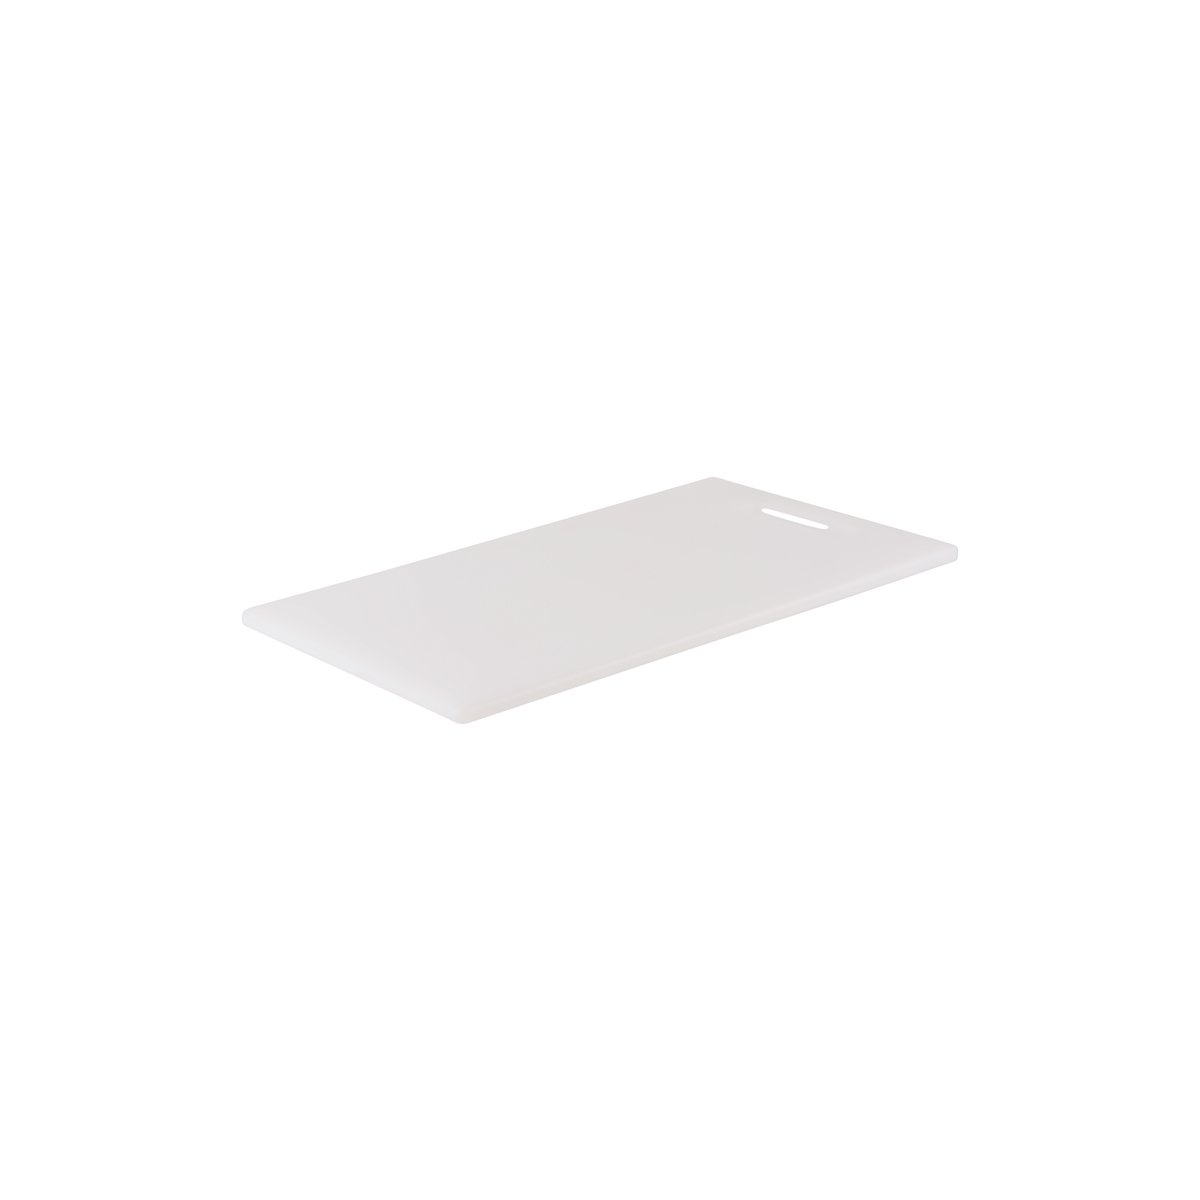 04319 Chef Inox Cutting Board Polyethylene White with Handle 250x400x12mm Tomkin Australia Hospitality Supplies